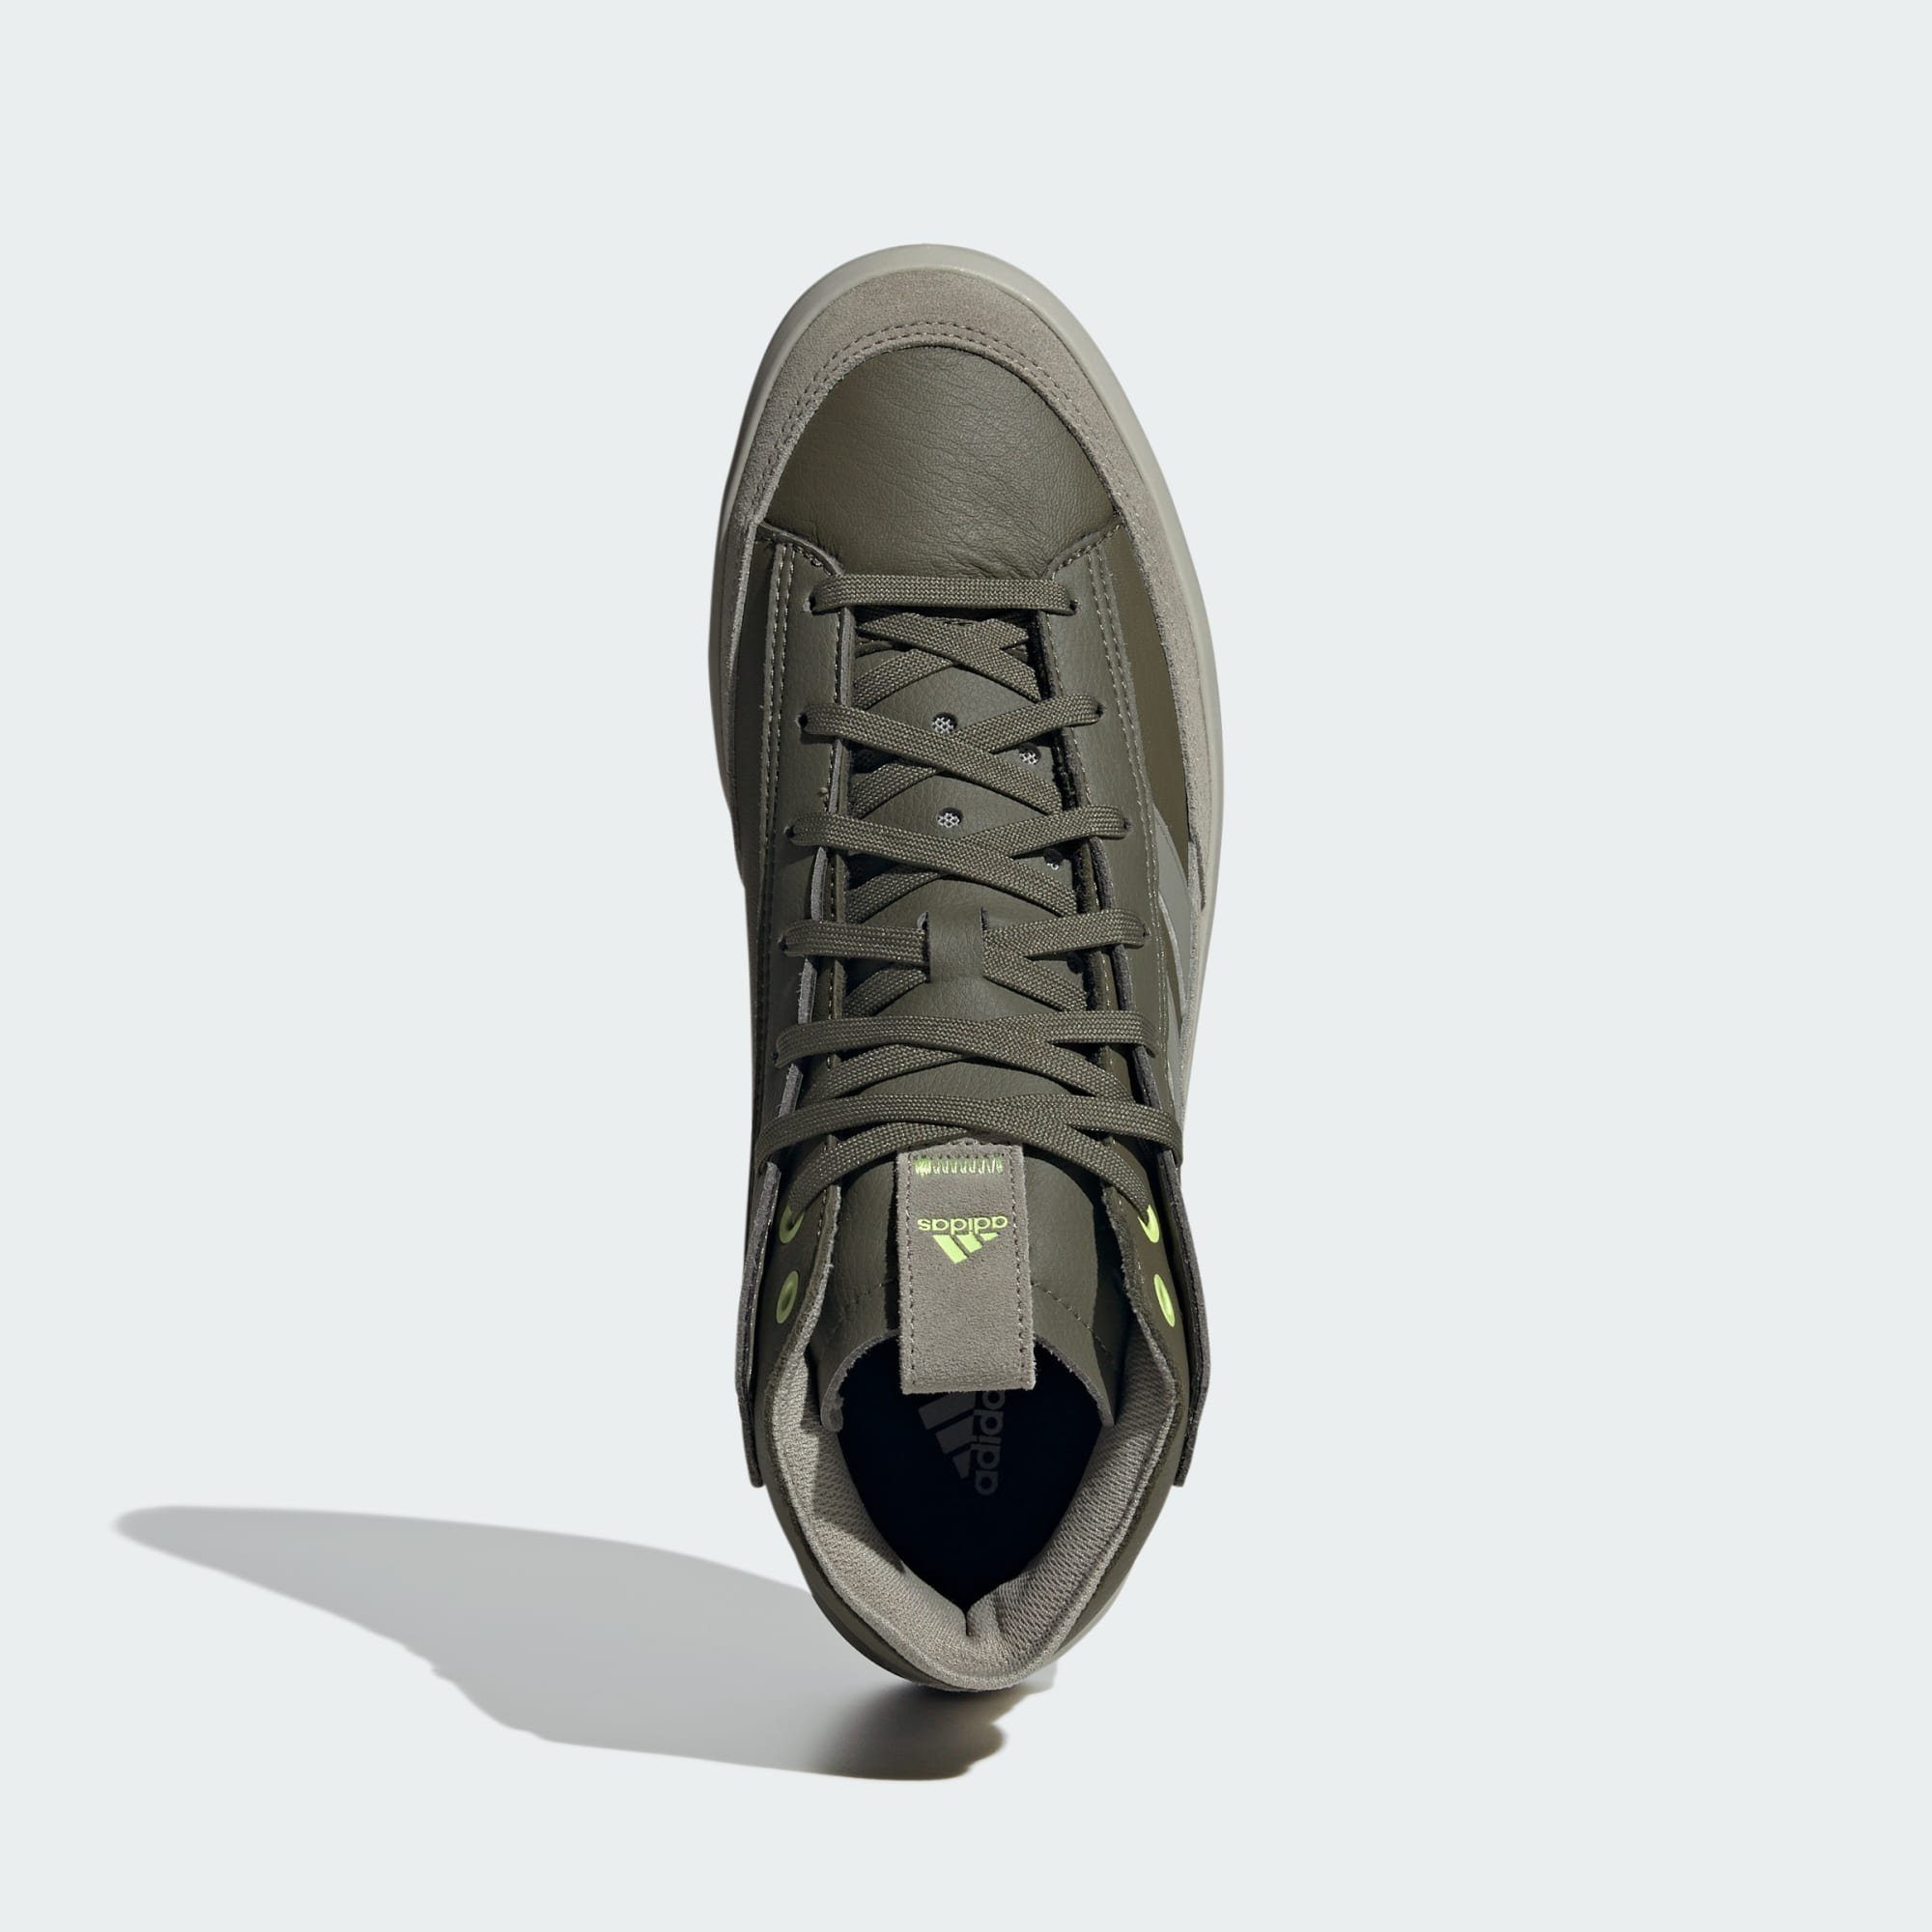 ZNSORED Pebble Sneaker Lime / SCHUH Silver / HI Sportswear Olive Pulse Strata adidas